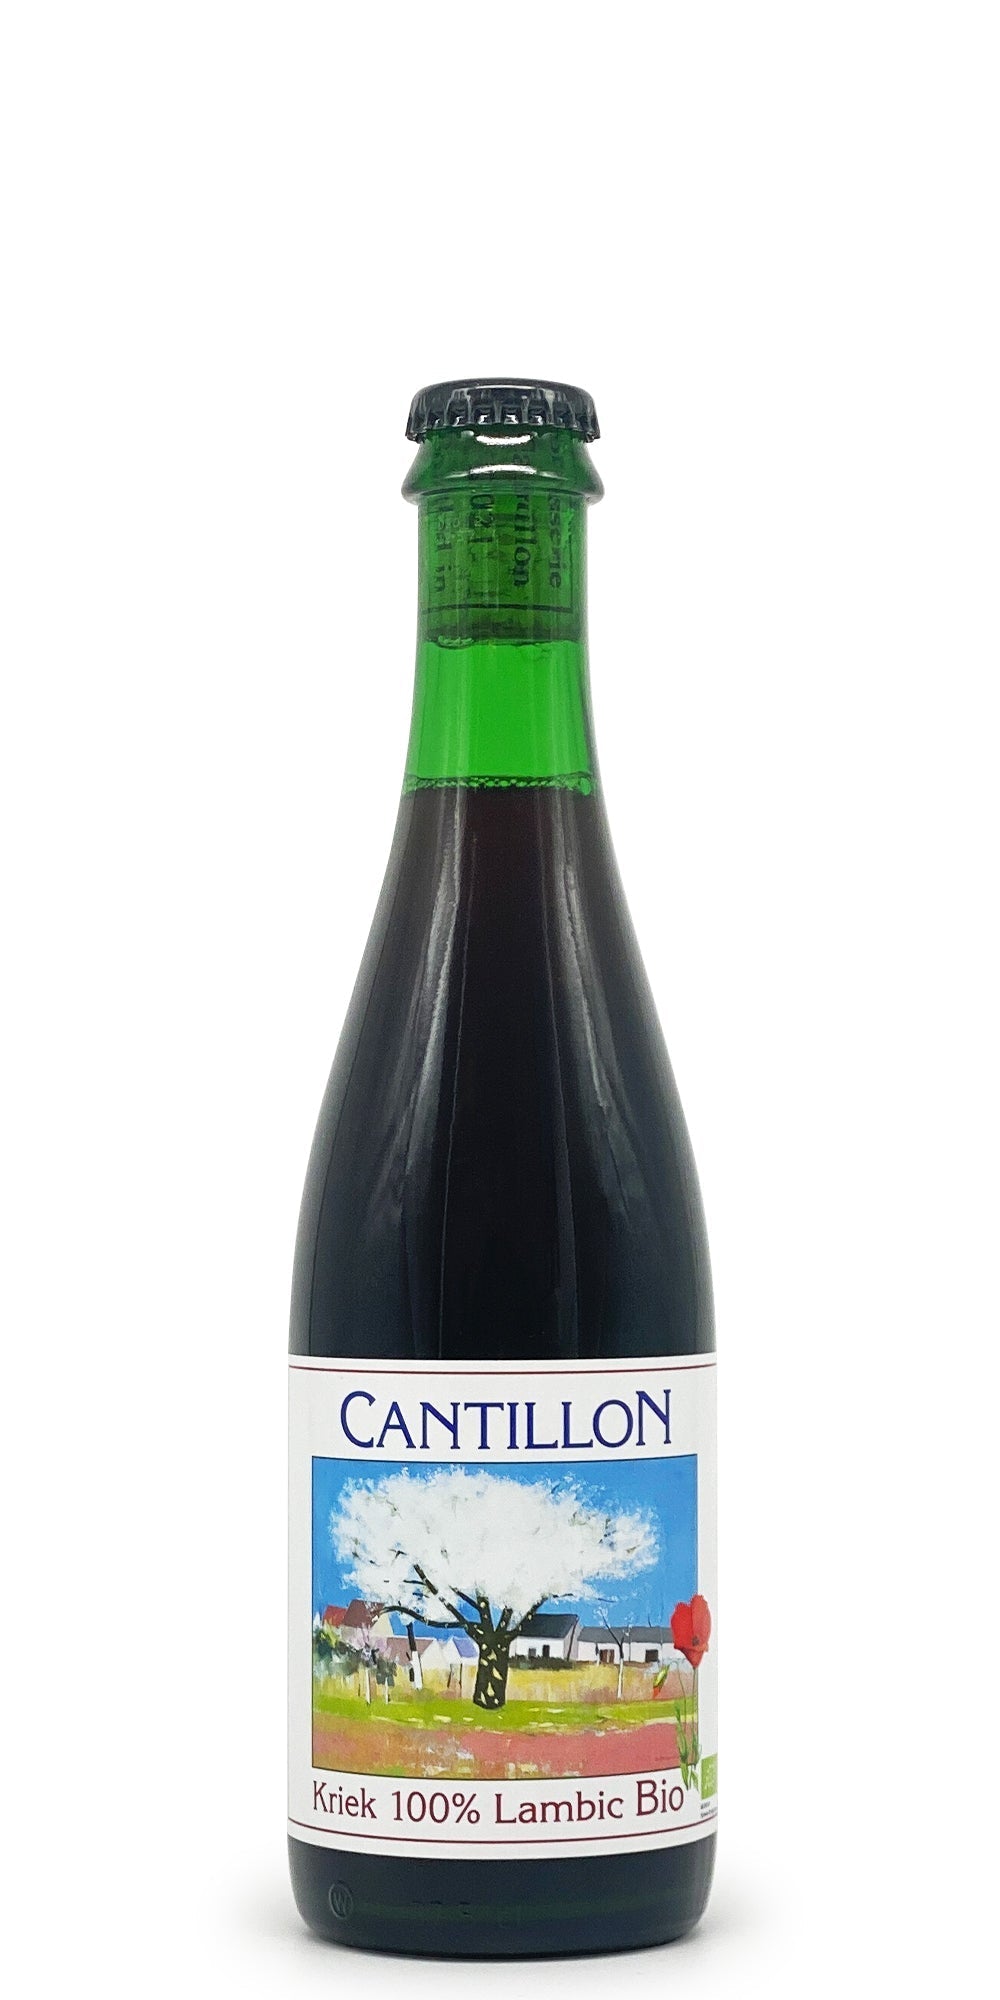 Cantillon - Kriek (2016)